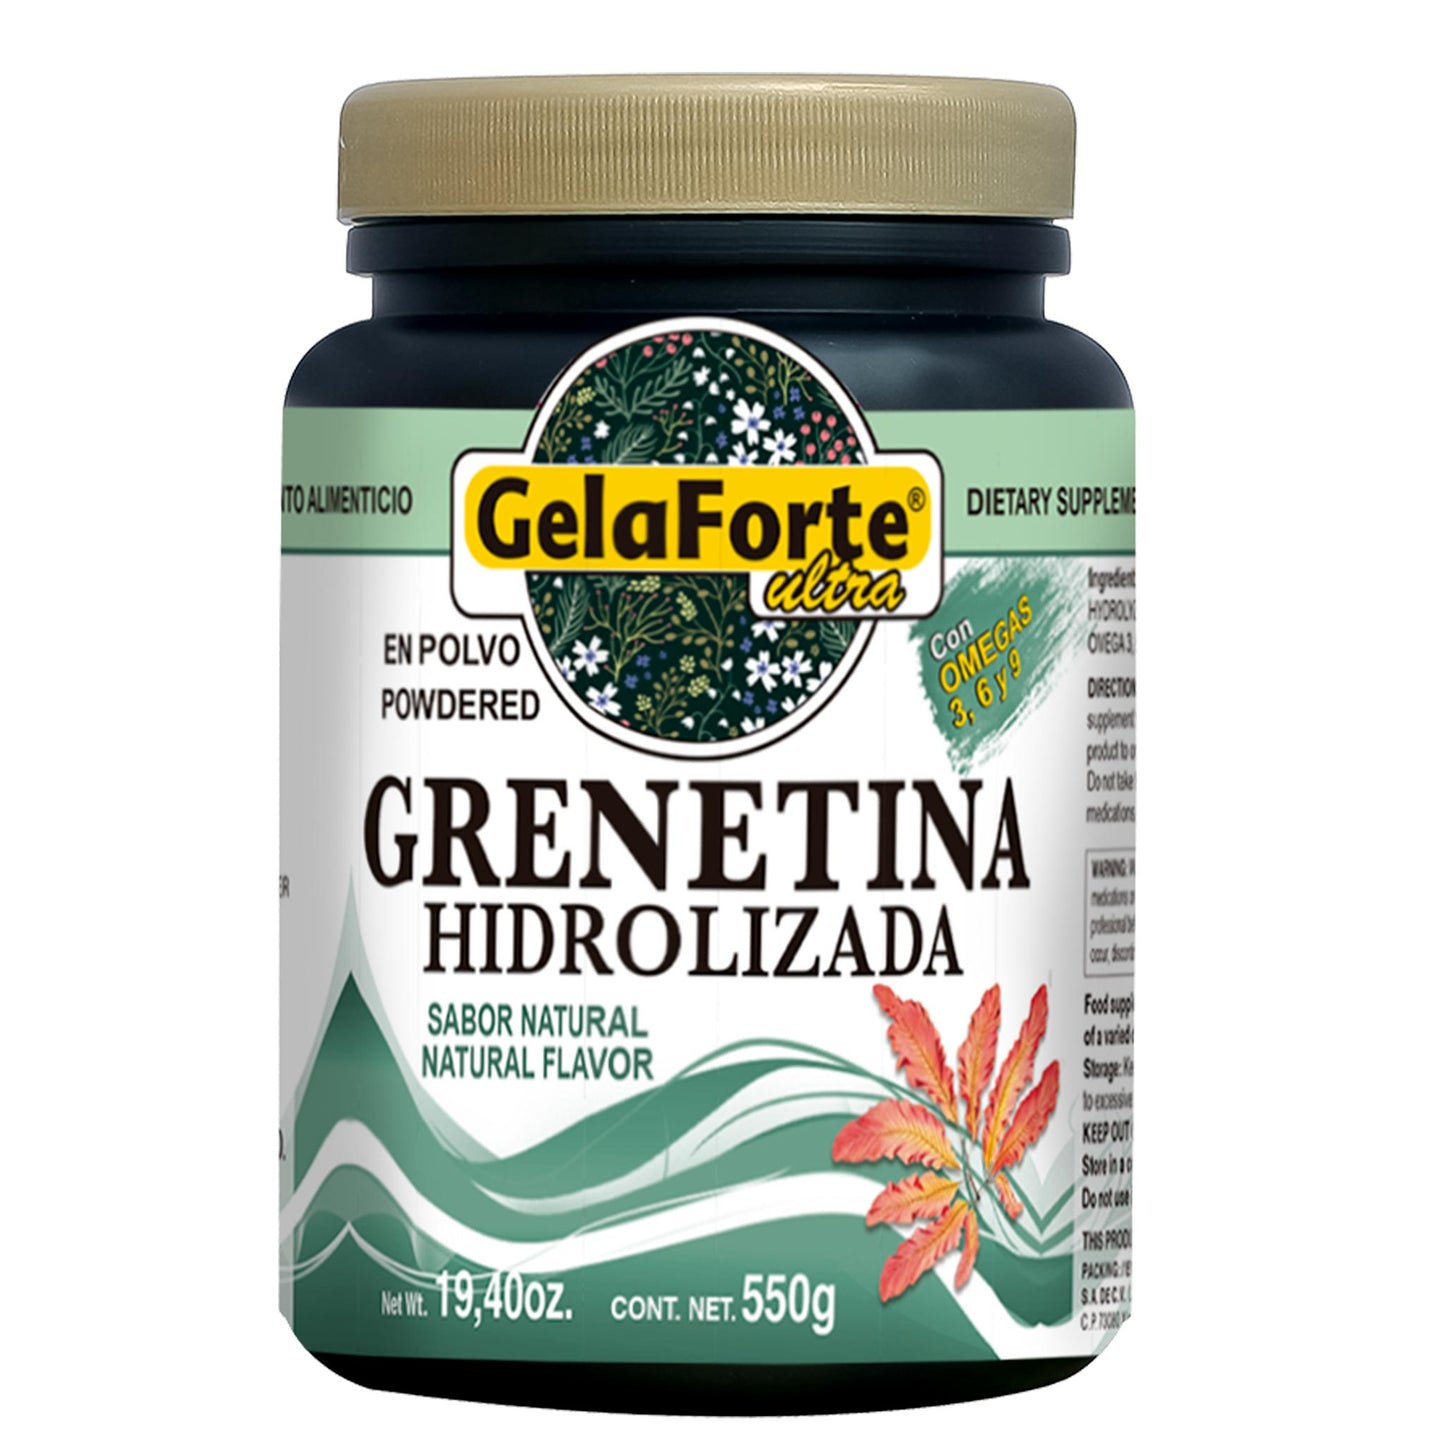 GELAFORTE ULTRA ® sabor natural 550g